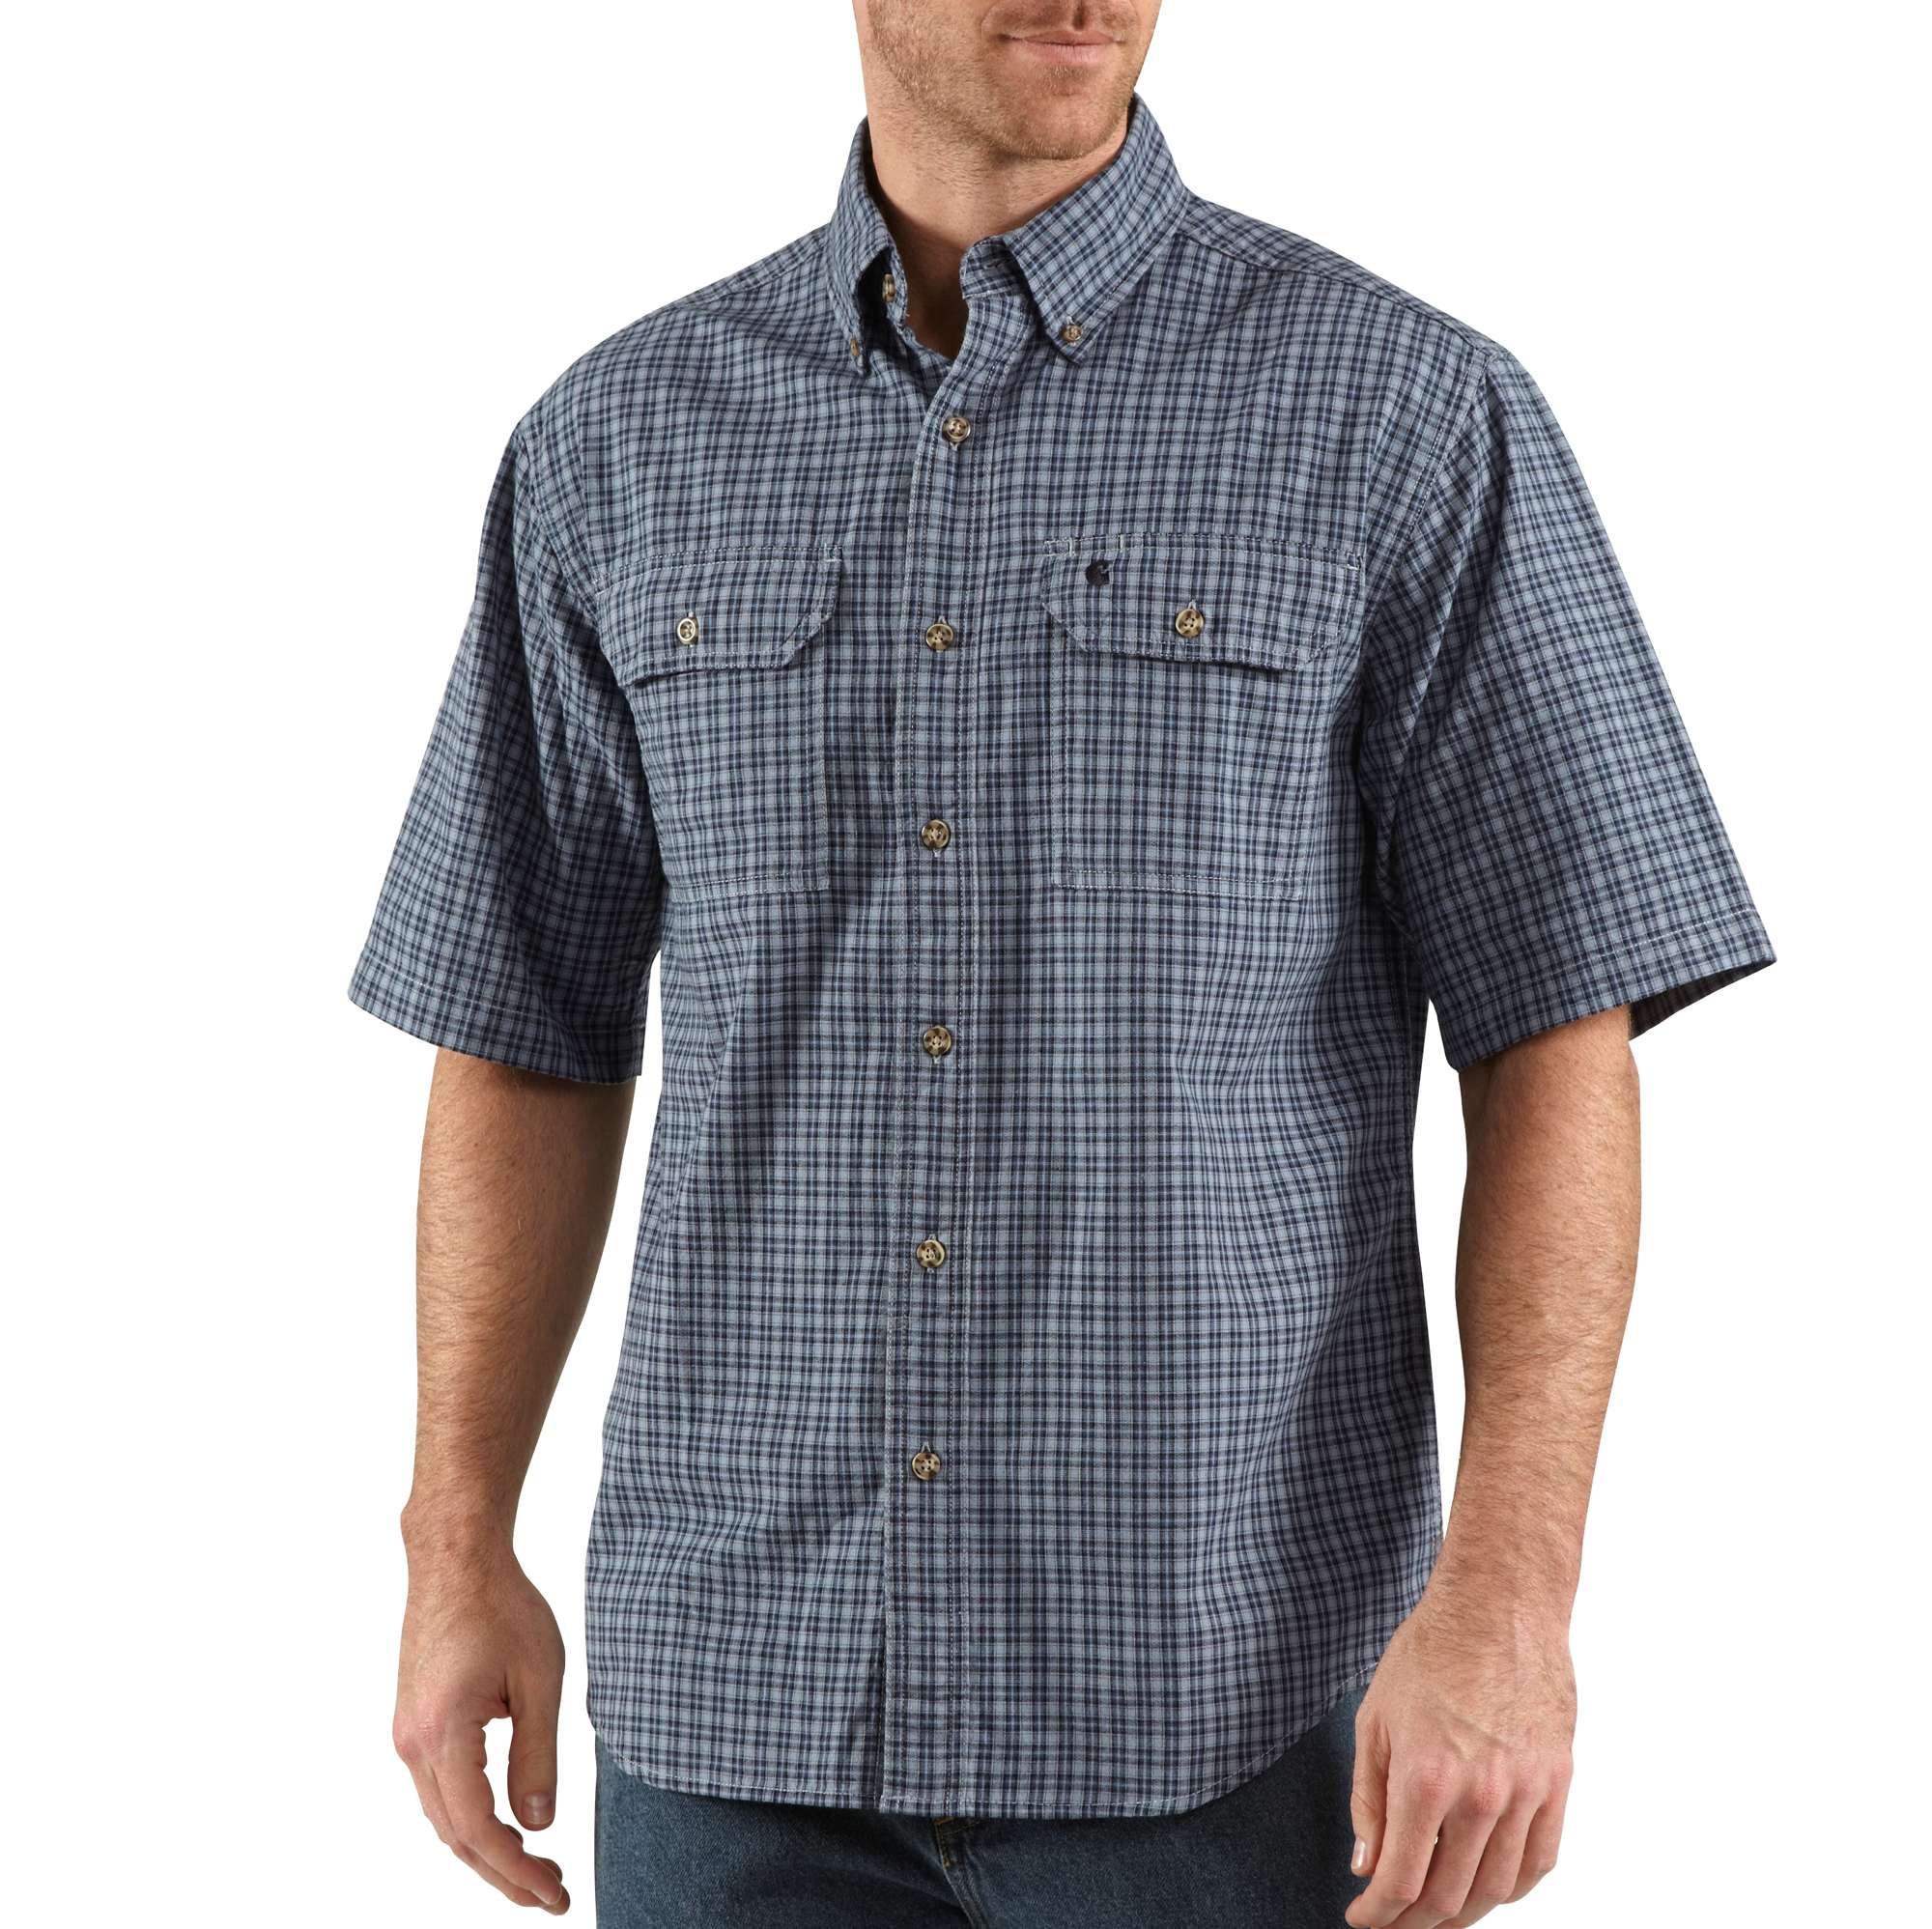 Men's Short-Sleeve Chambray Plaid Shirt